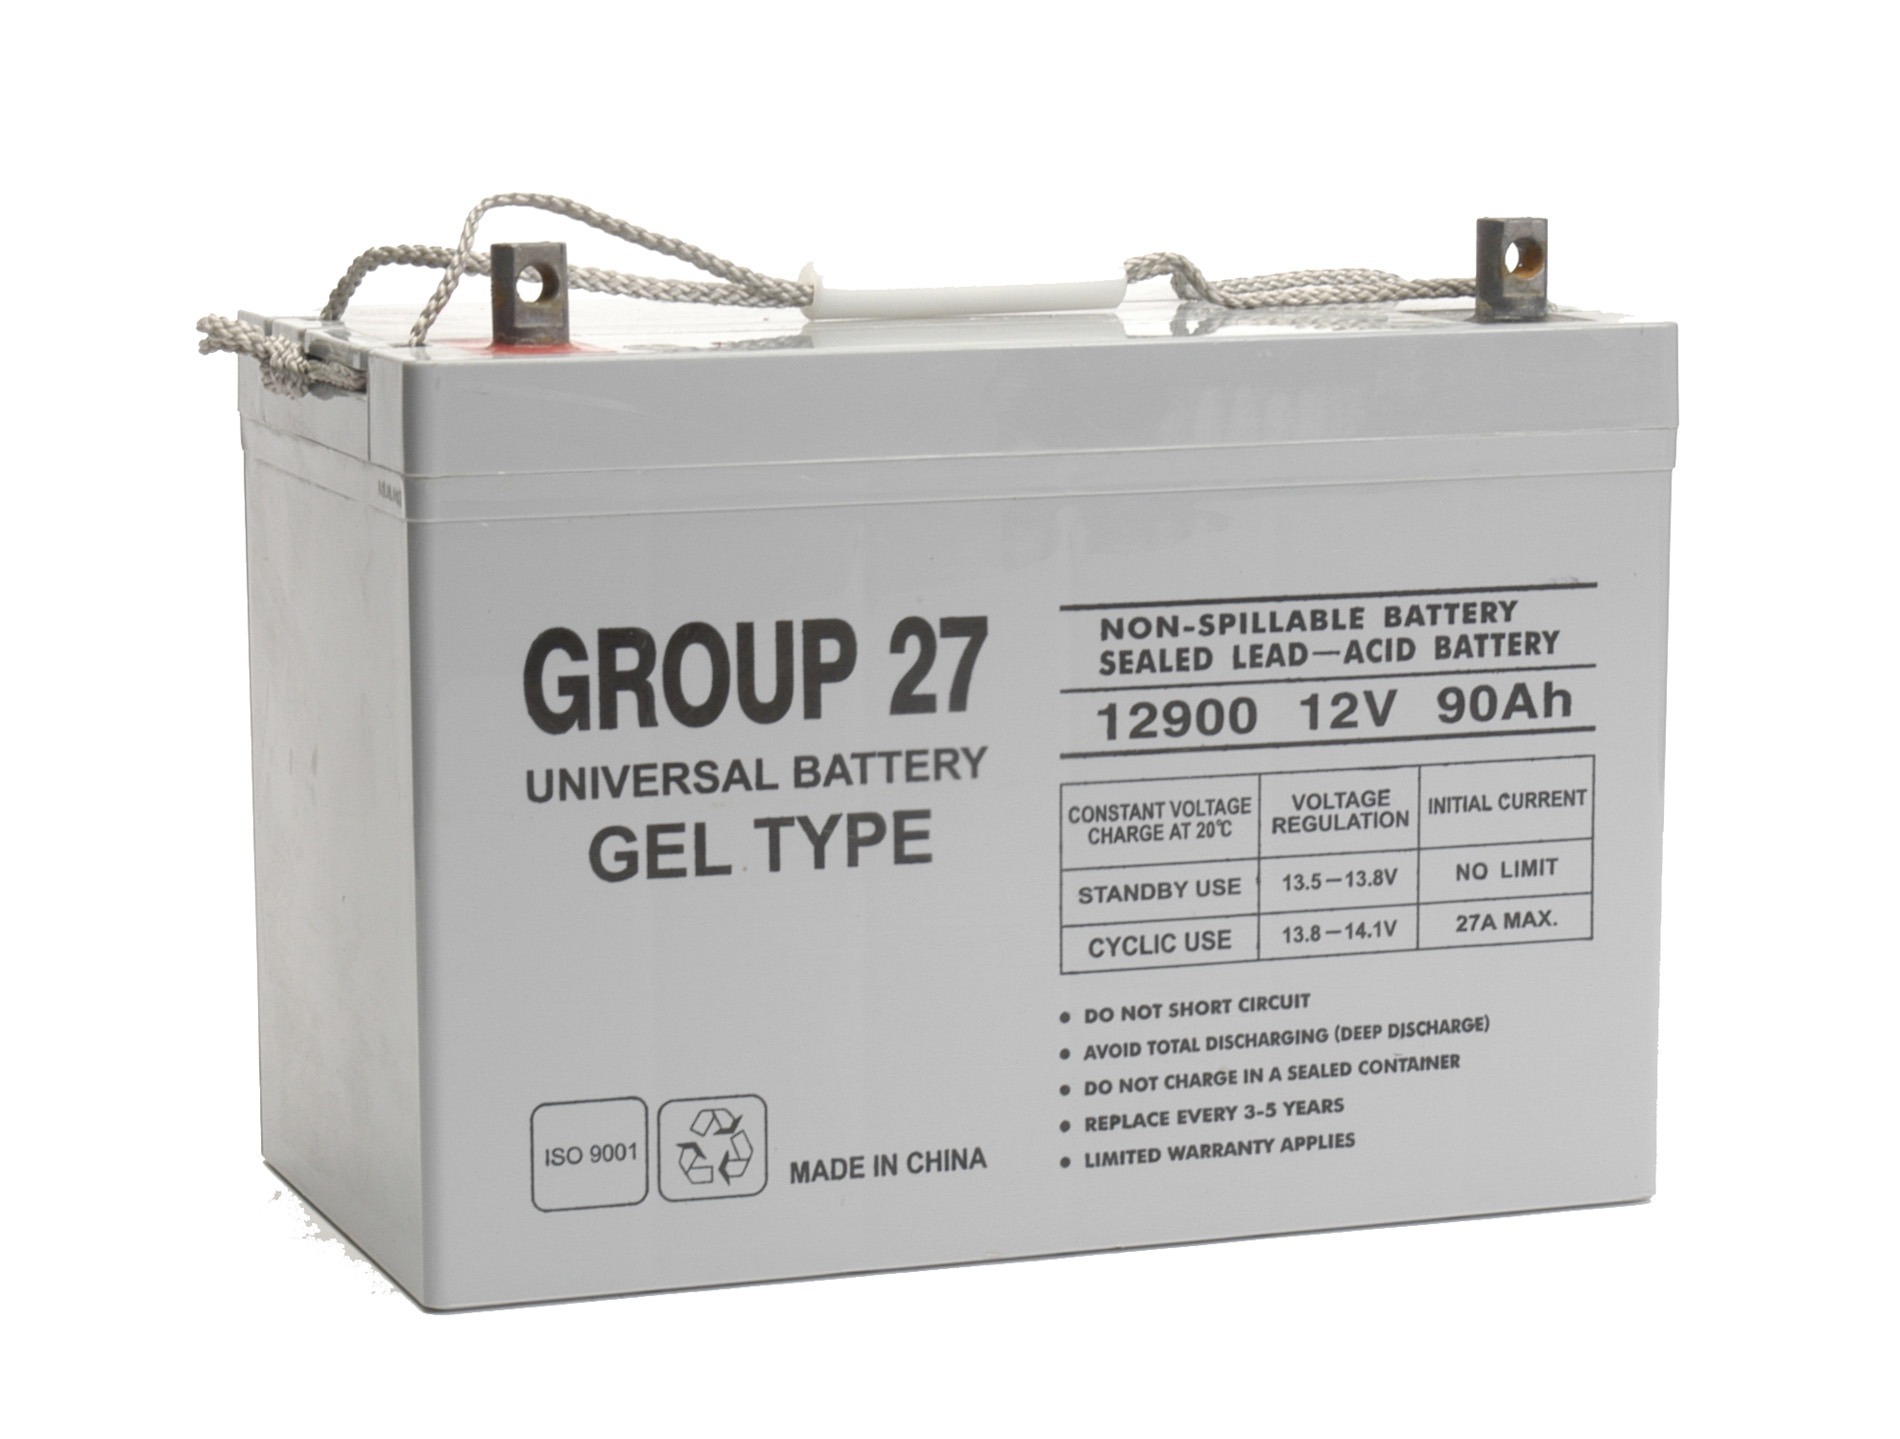 Sealed lead battery. Gel Battery. Аккумулятор для ДГУ Urban Battery 12v 90ah. Gel 12-85. Non-Spillable аккумулятор Liuu.